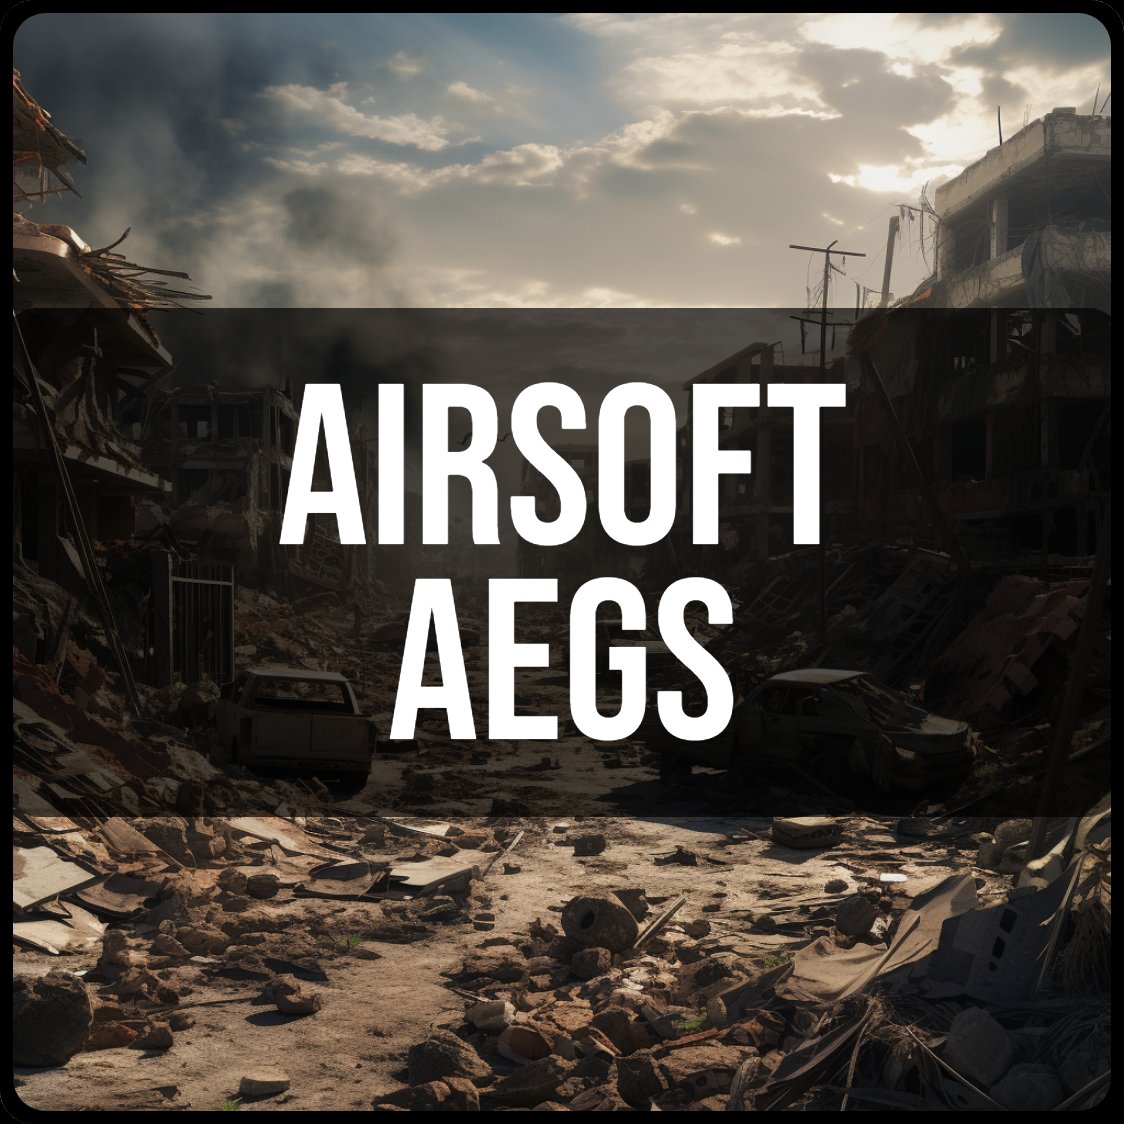 AEG's for Sale: Electric Airsoft Rifles & Airsoft Guns from Fox Airsoft